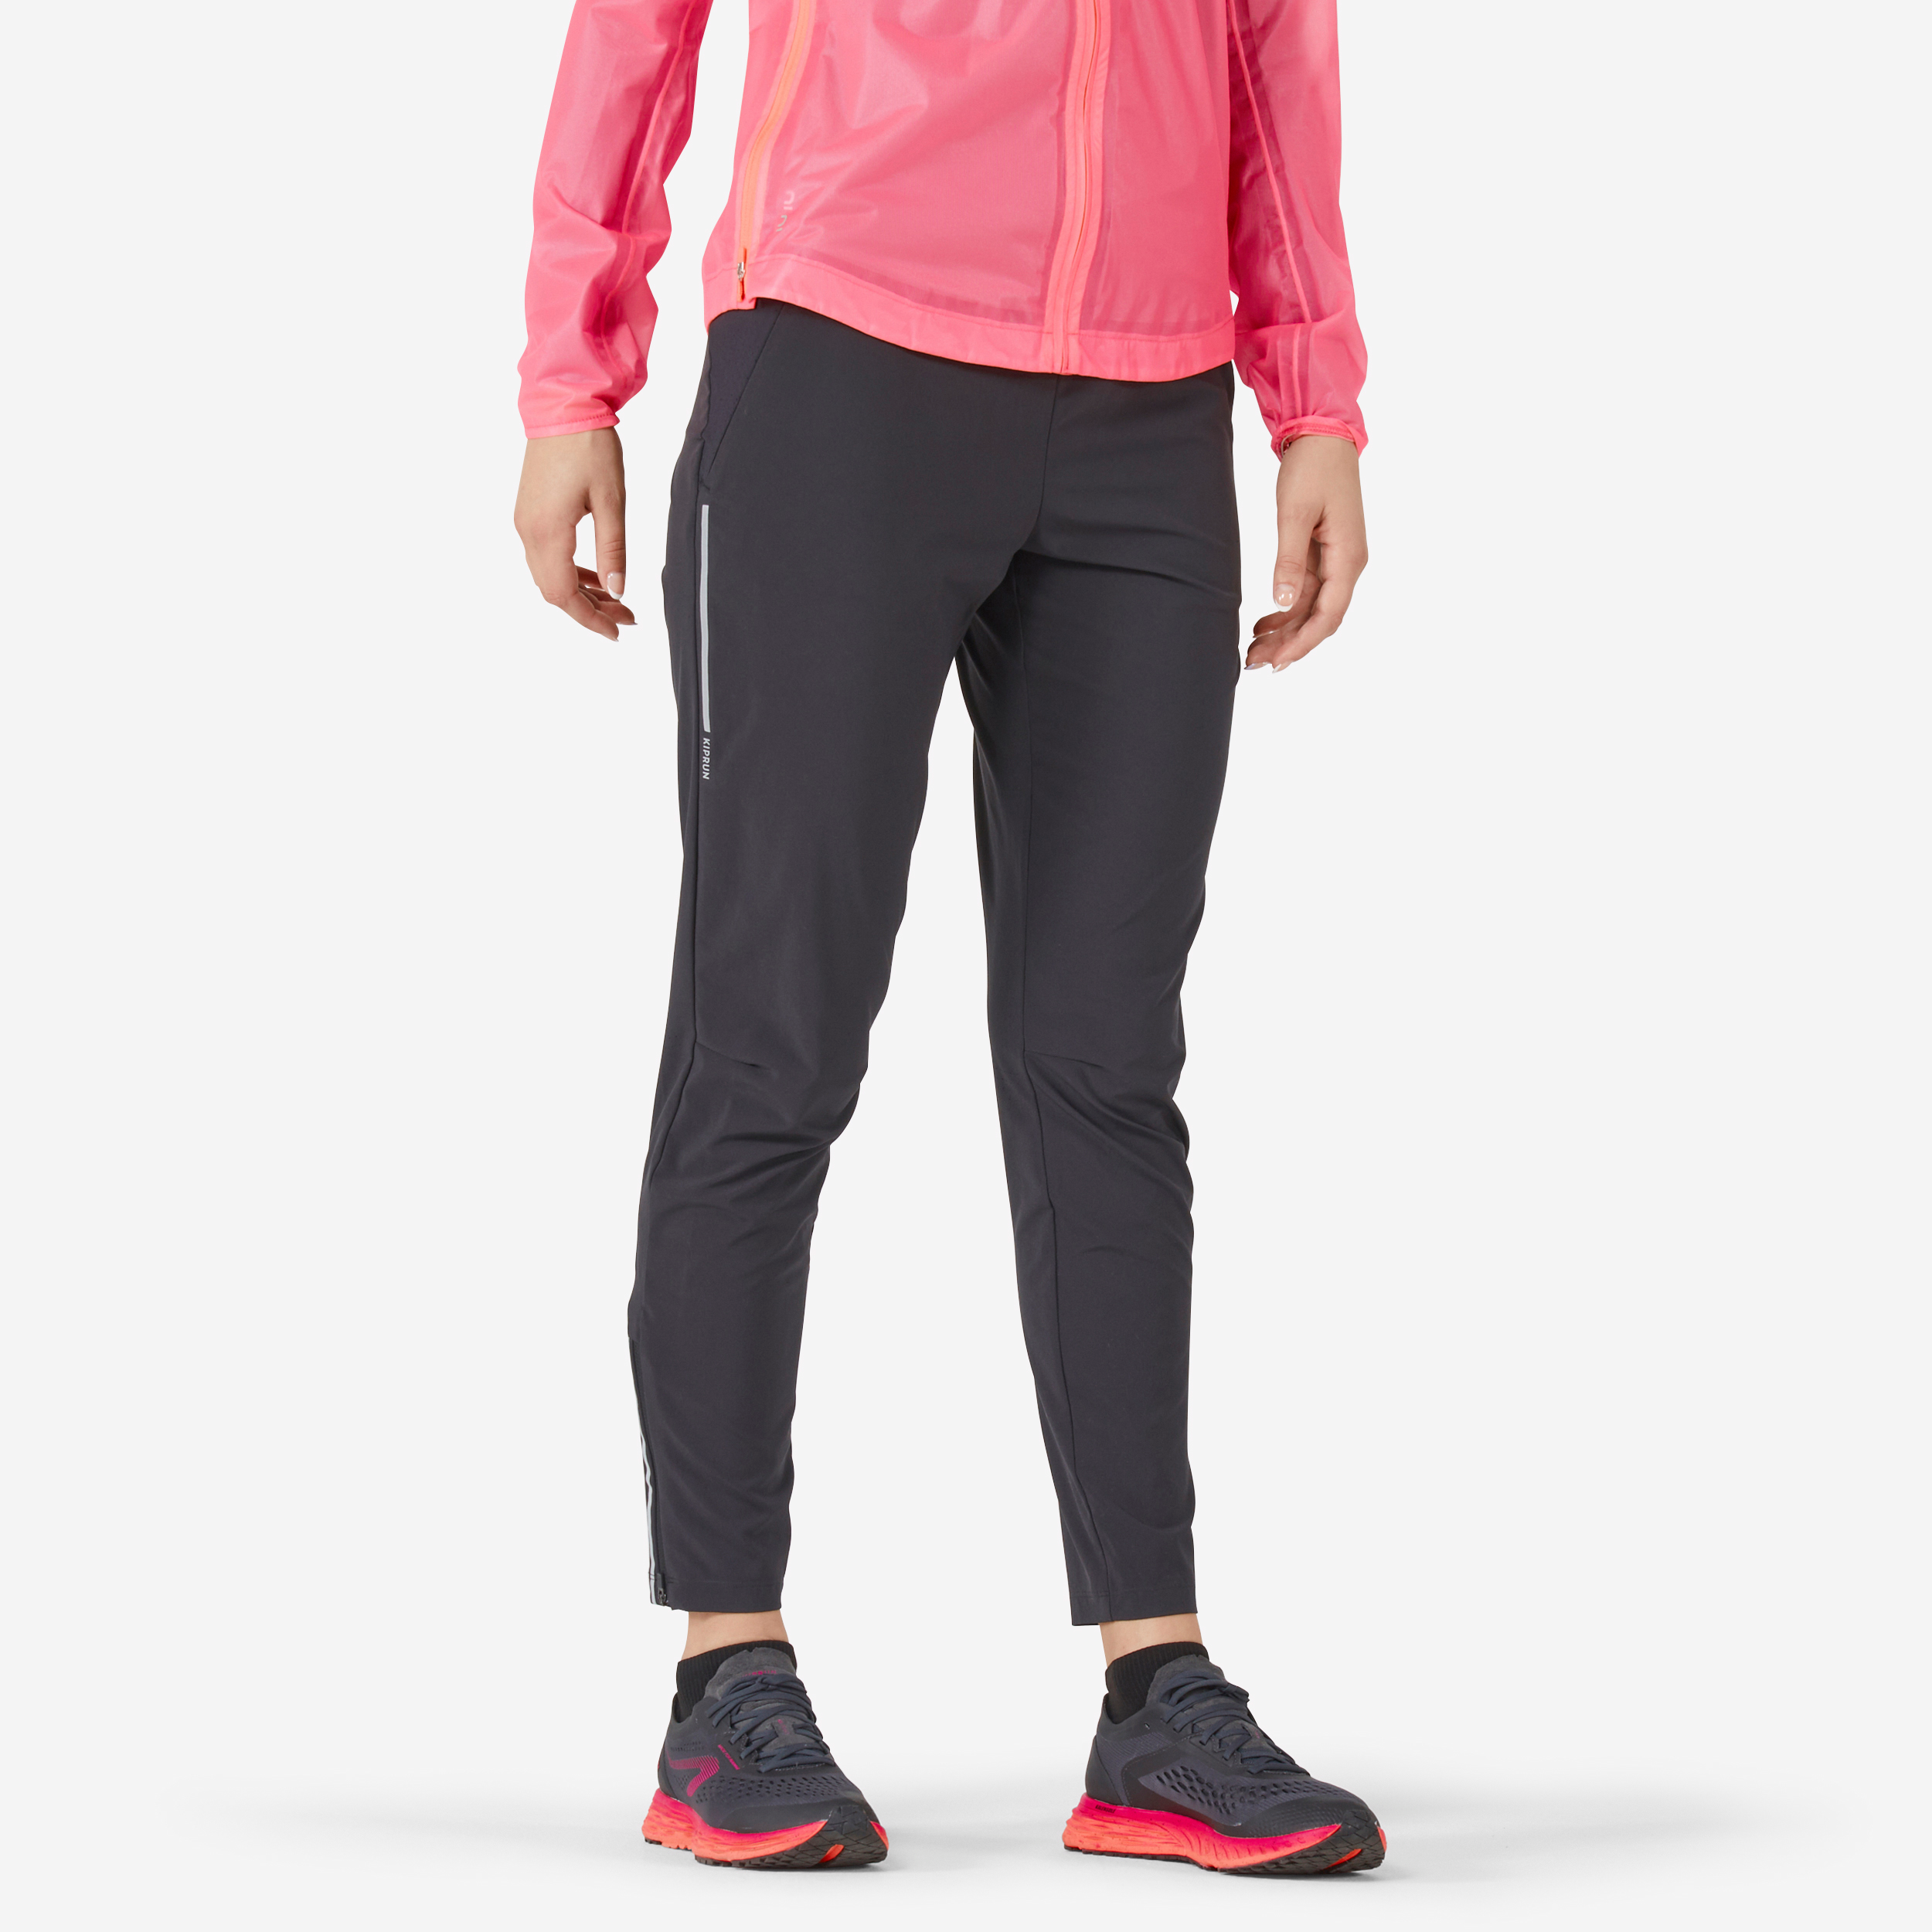 Nike Running - Gants légers pour femme - Noir